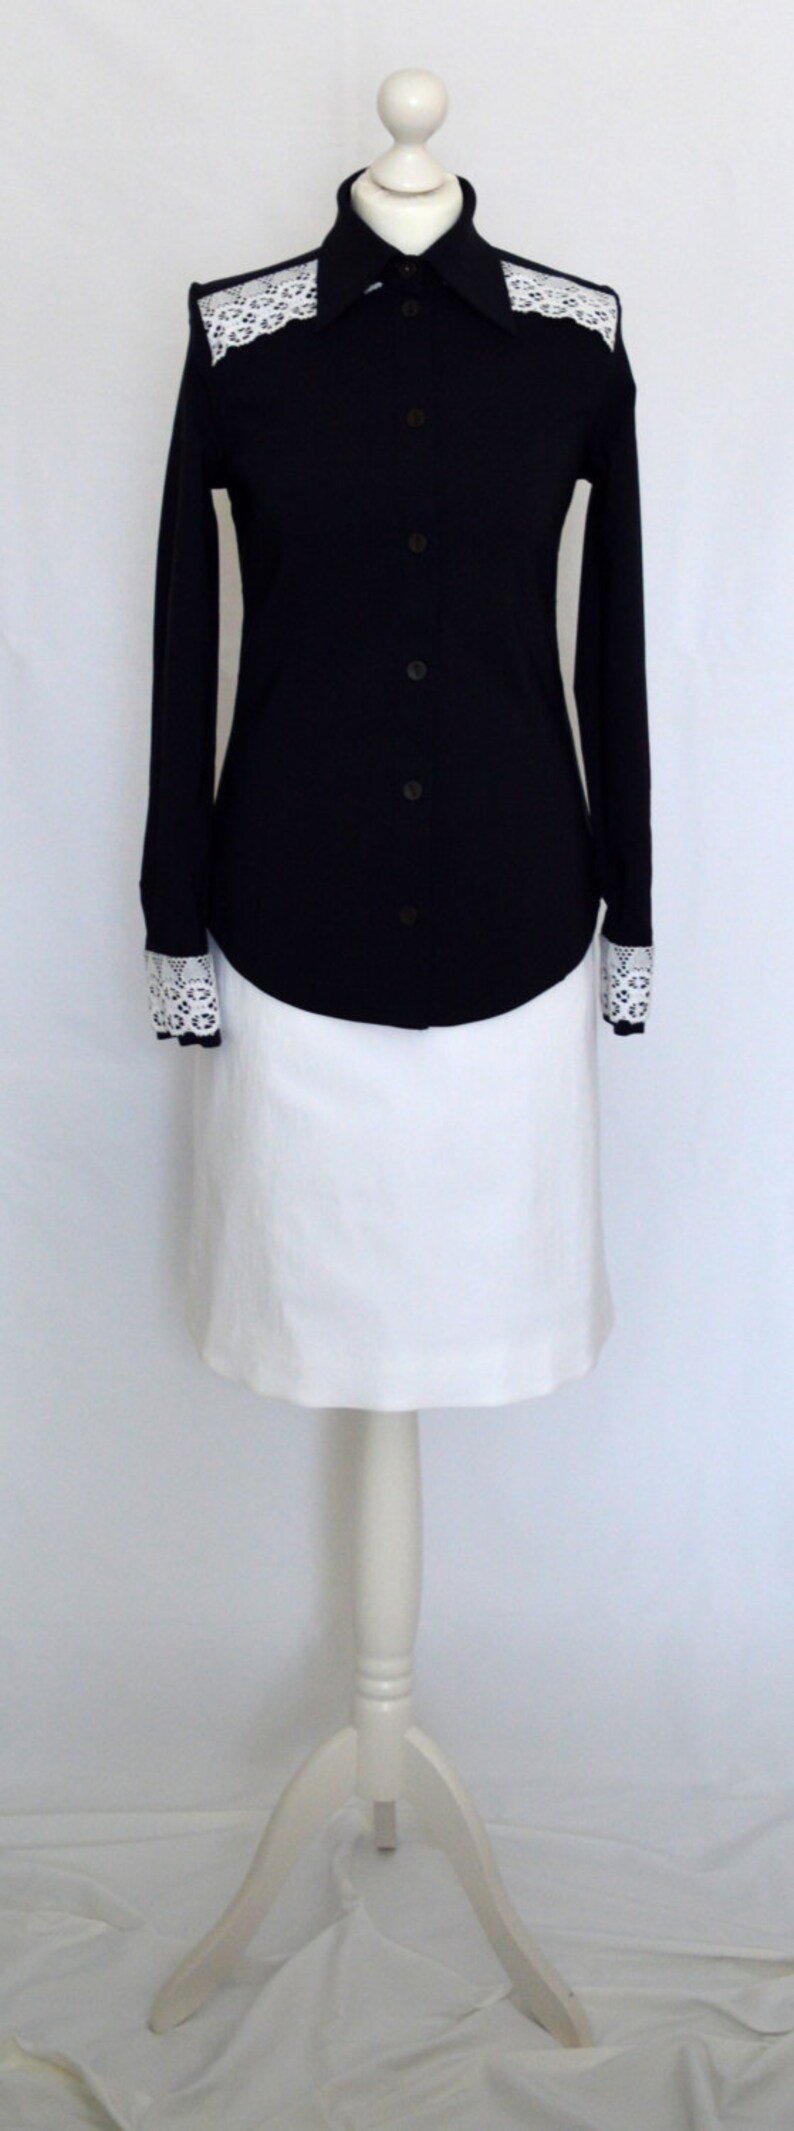 SALE Navy and white shirt, lace blouse Size UK 10, 12, 14 / US 6, 8, 10 image 3